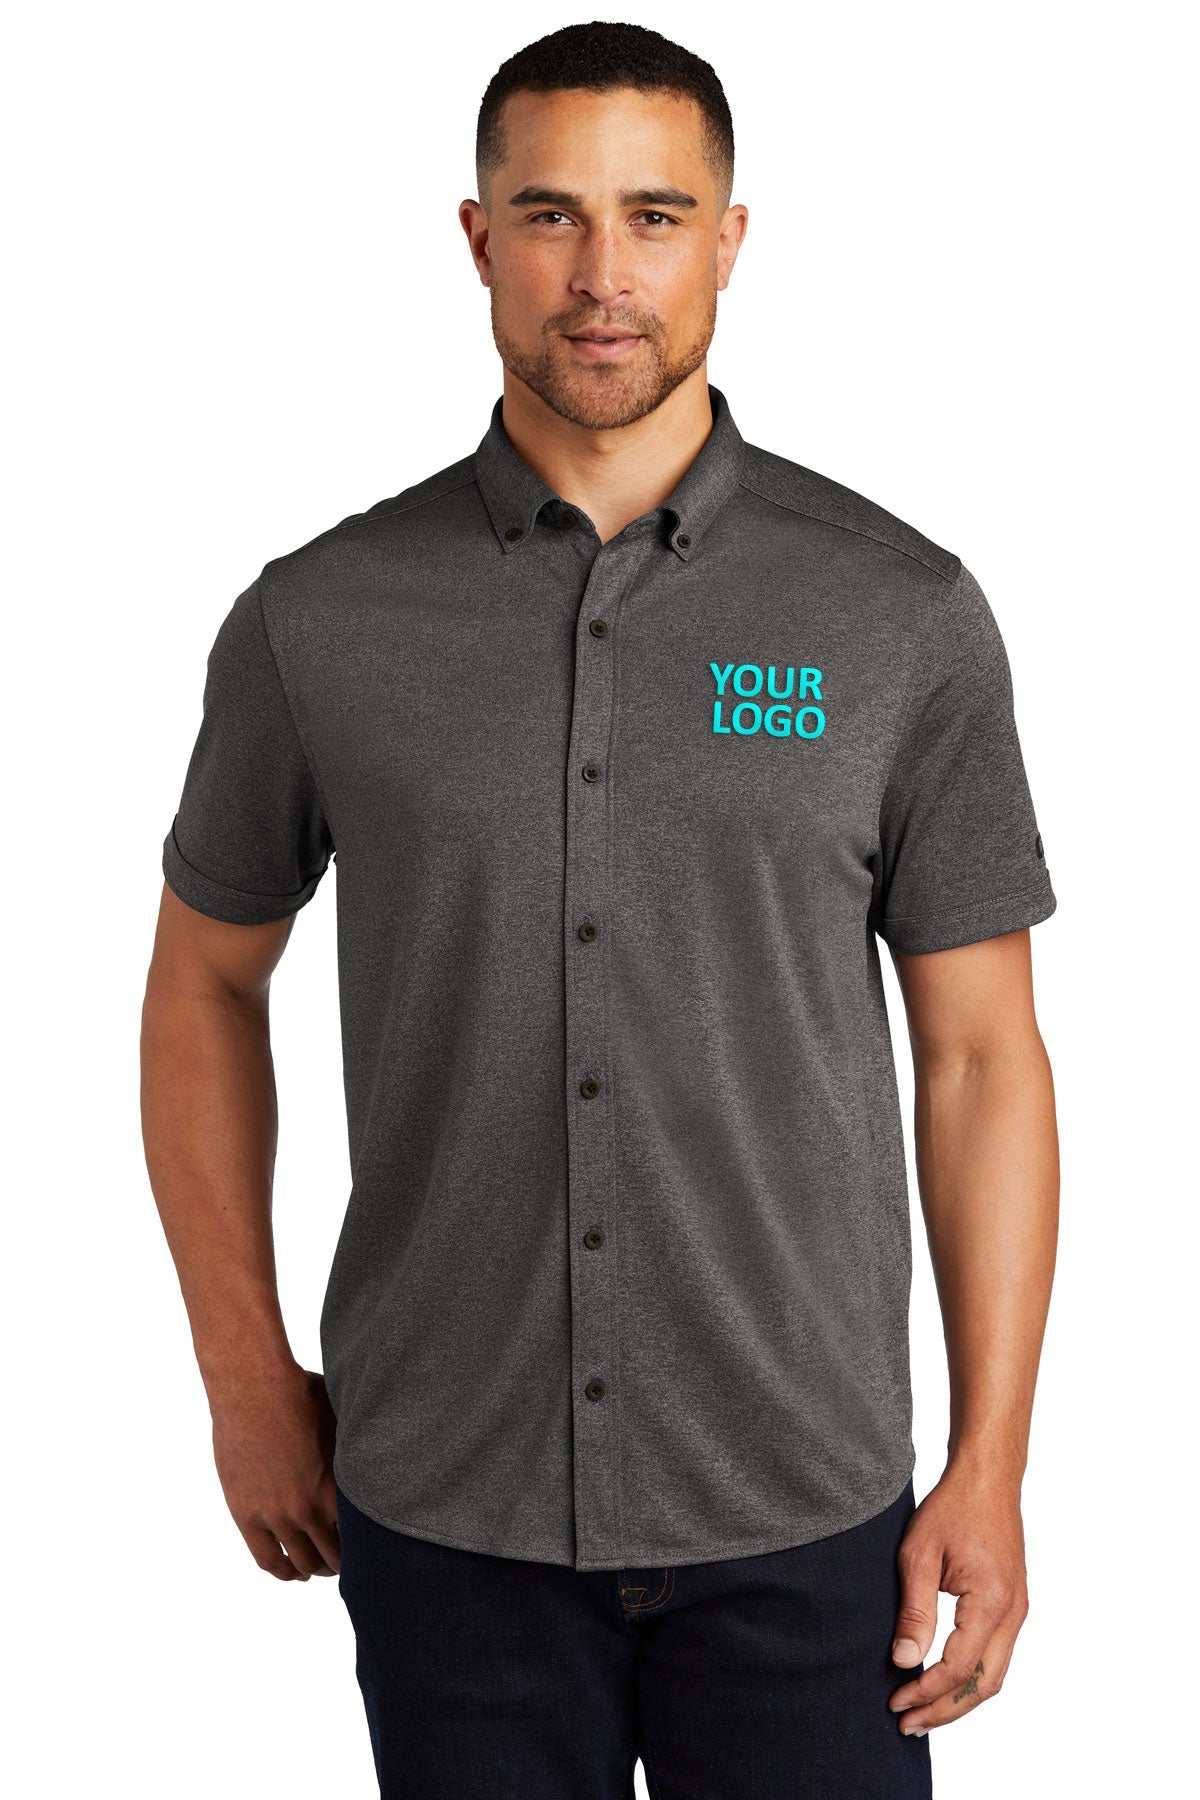 OGIO Dark Heather Grey OG141 custom made polo shirts with logo